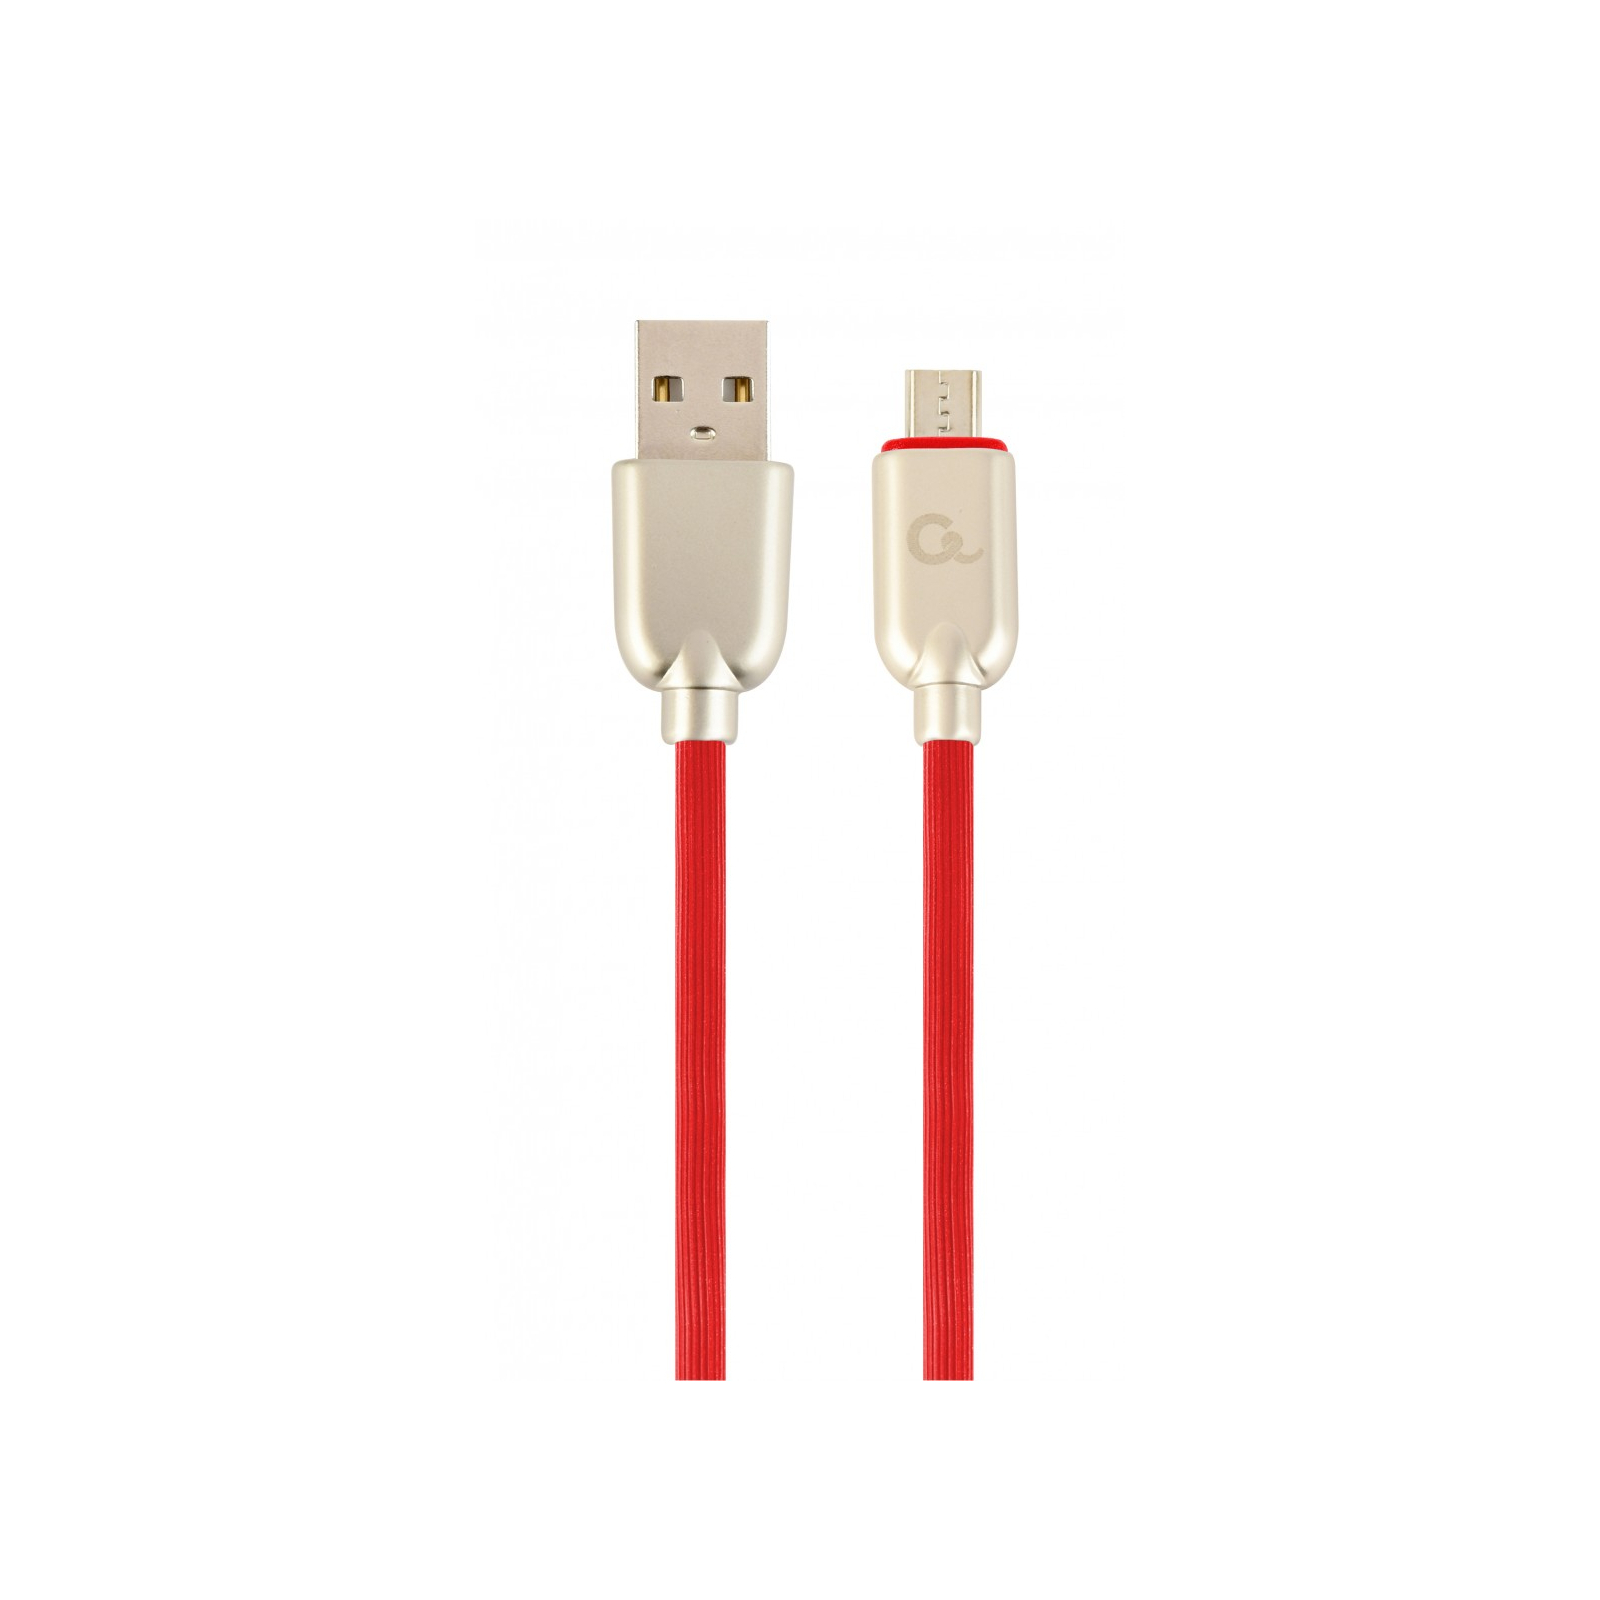 Дата кабель USB 2.0 Micro 5P to AM Cablexpert (CC-USB2R-AMmBM-2M-W)